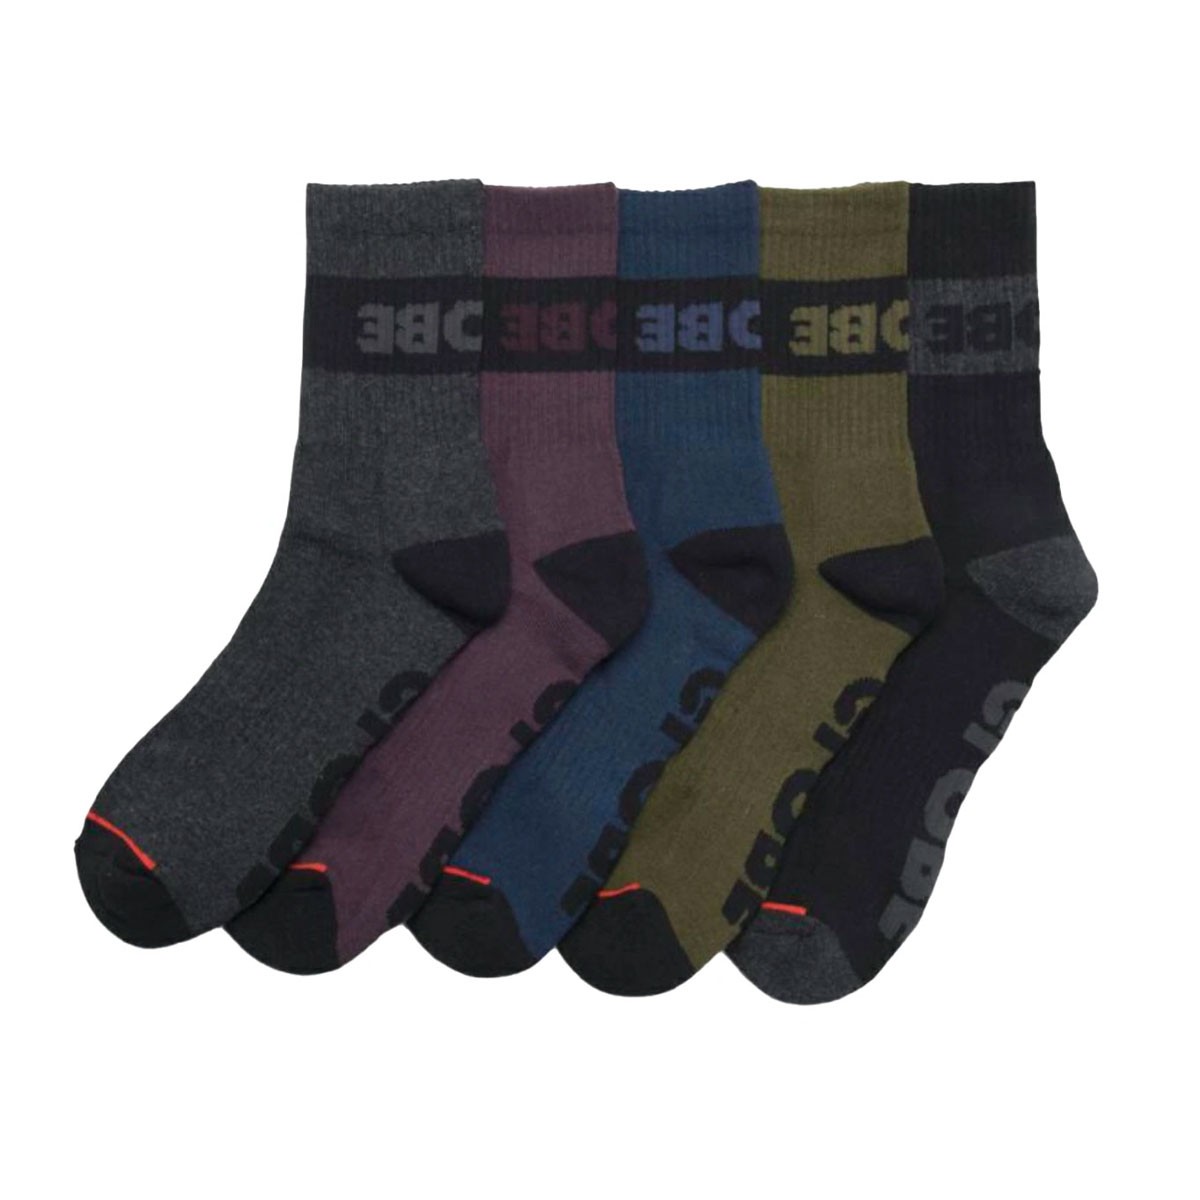 Horizons Crew Sock 5 Pack - gb72039018